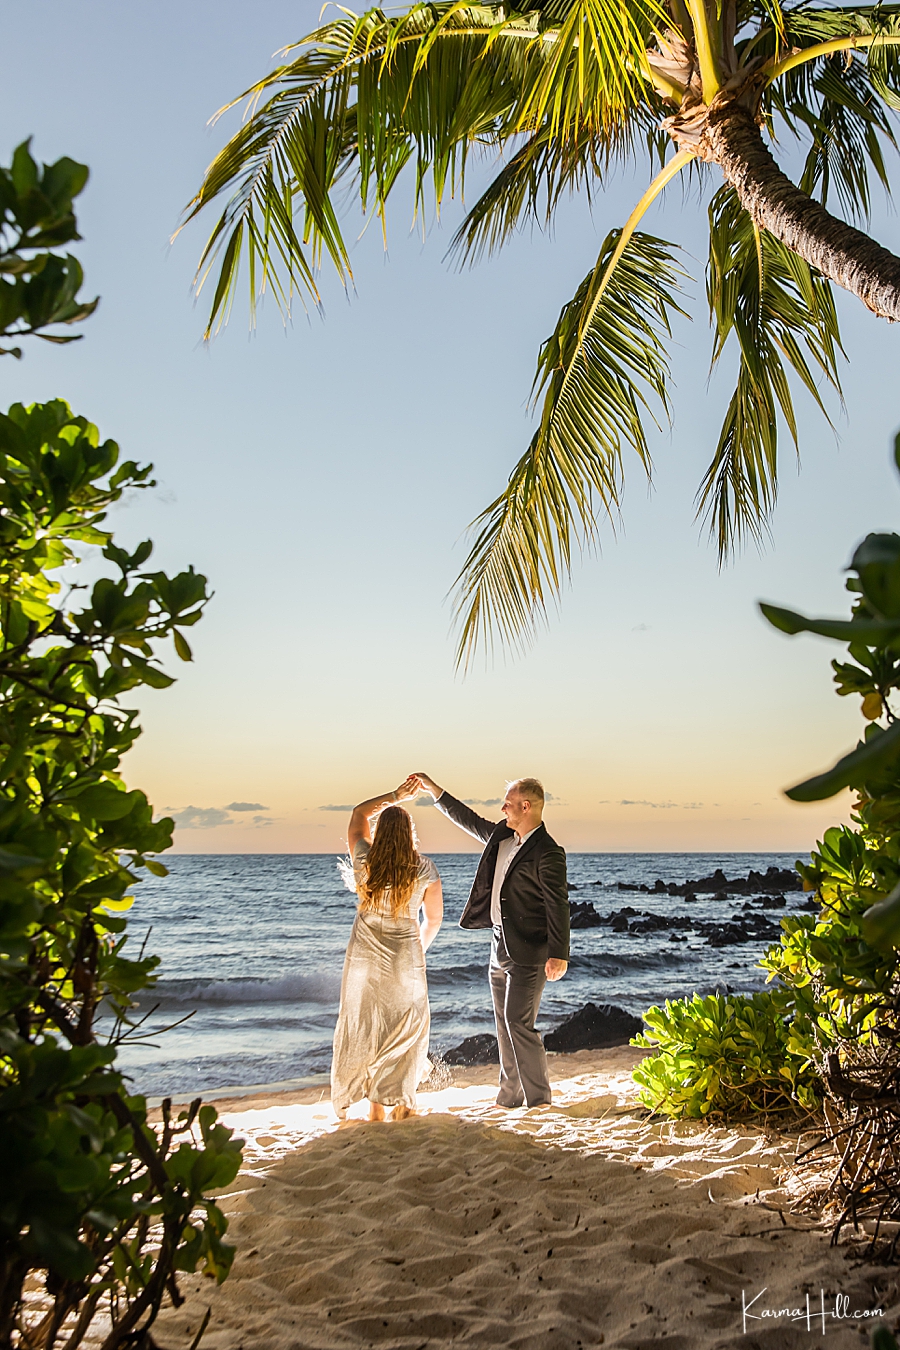 Maui couples photographer
